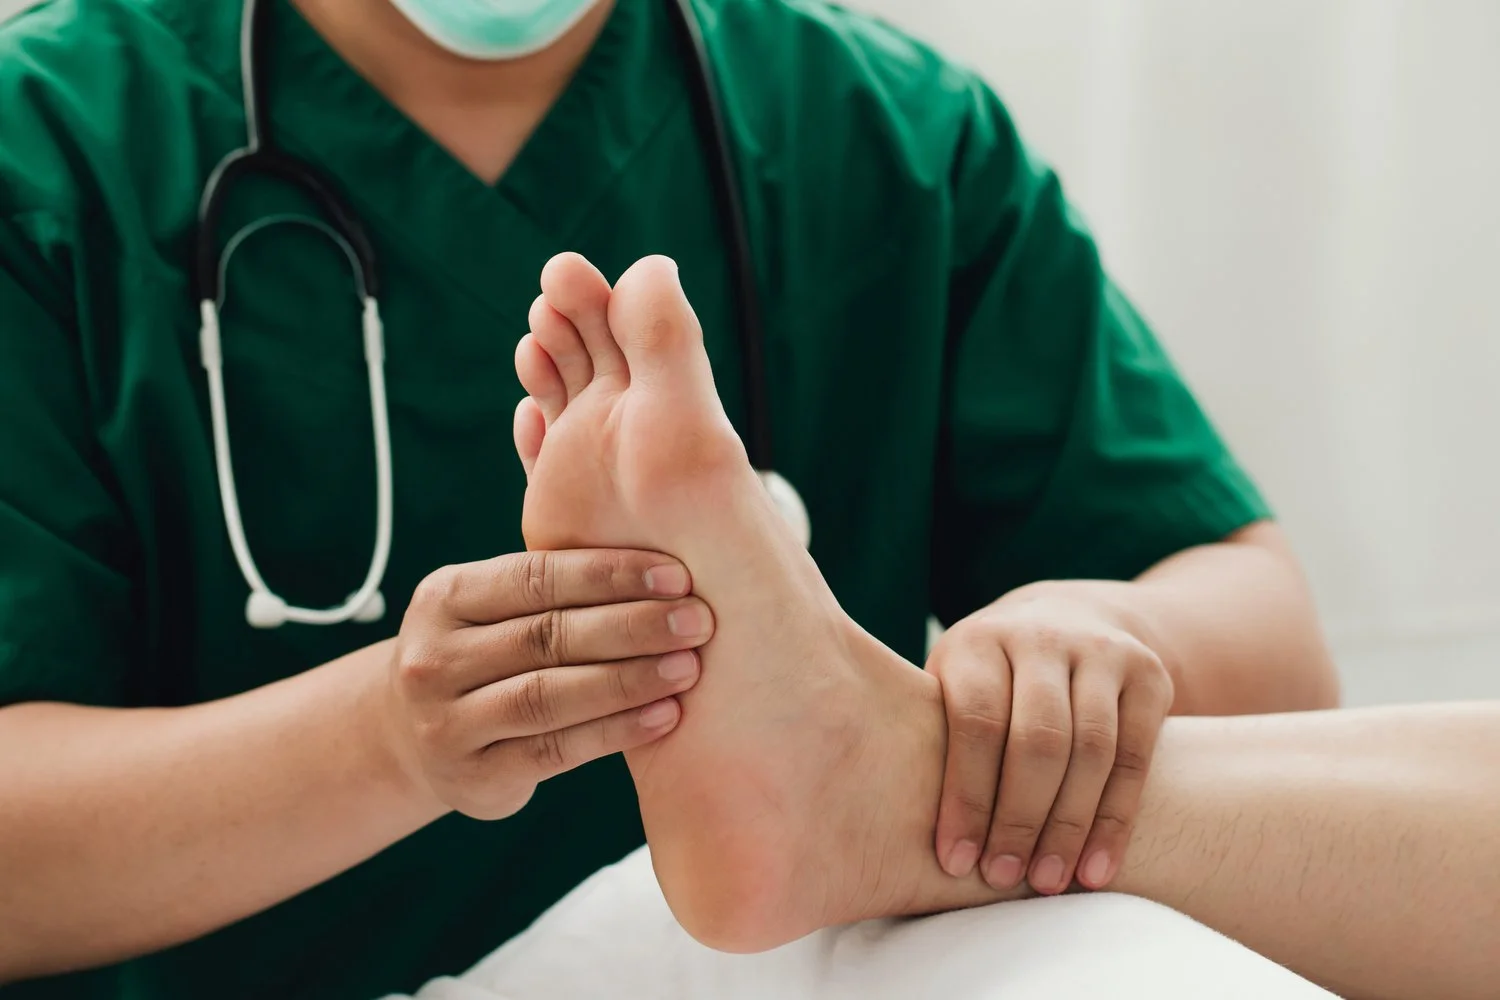 Foot neuropathy